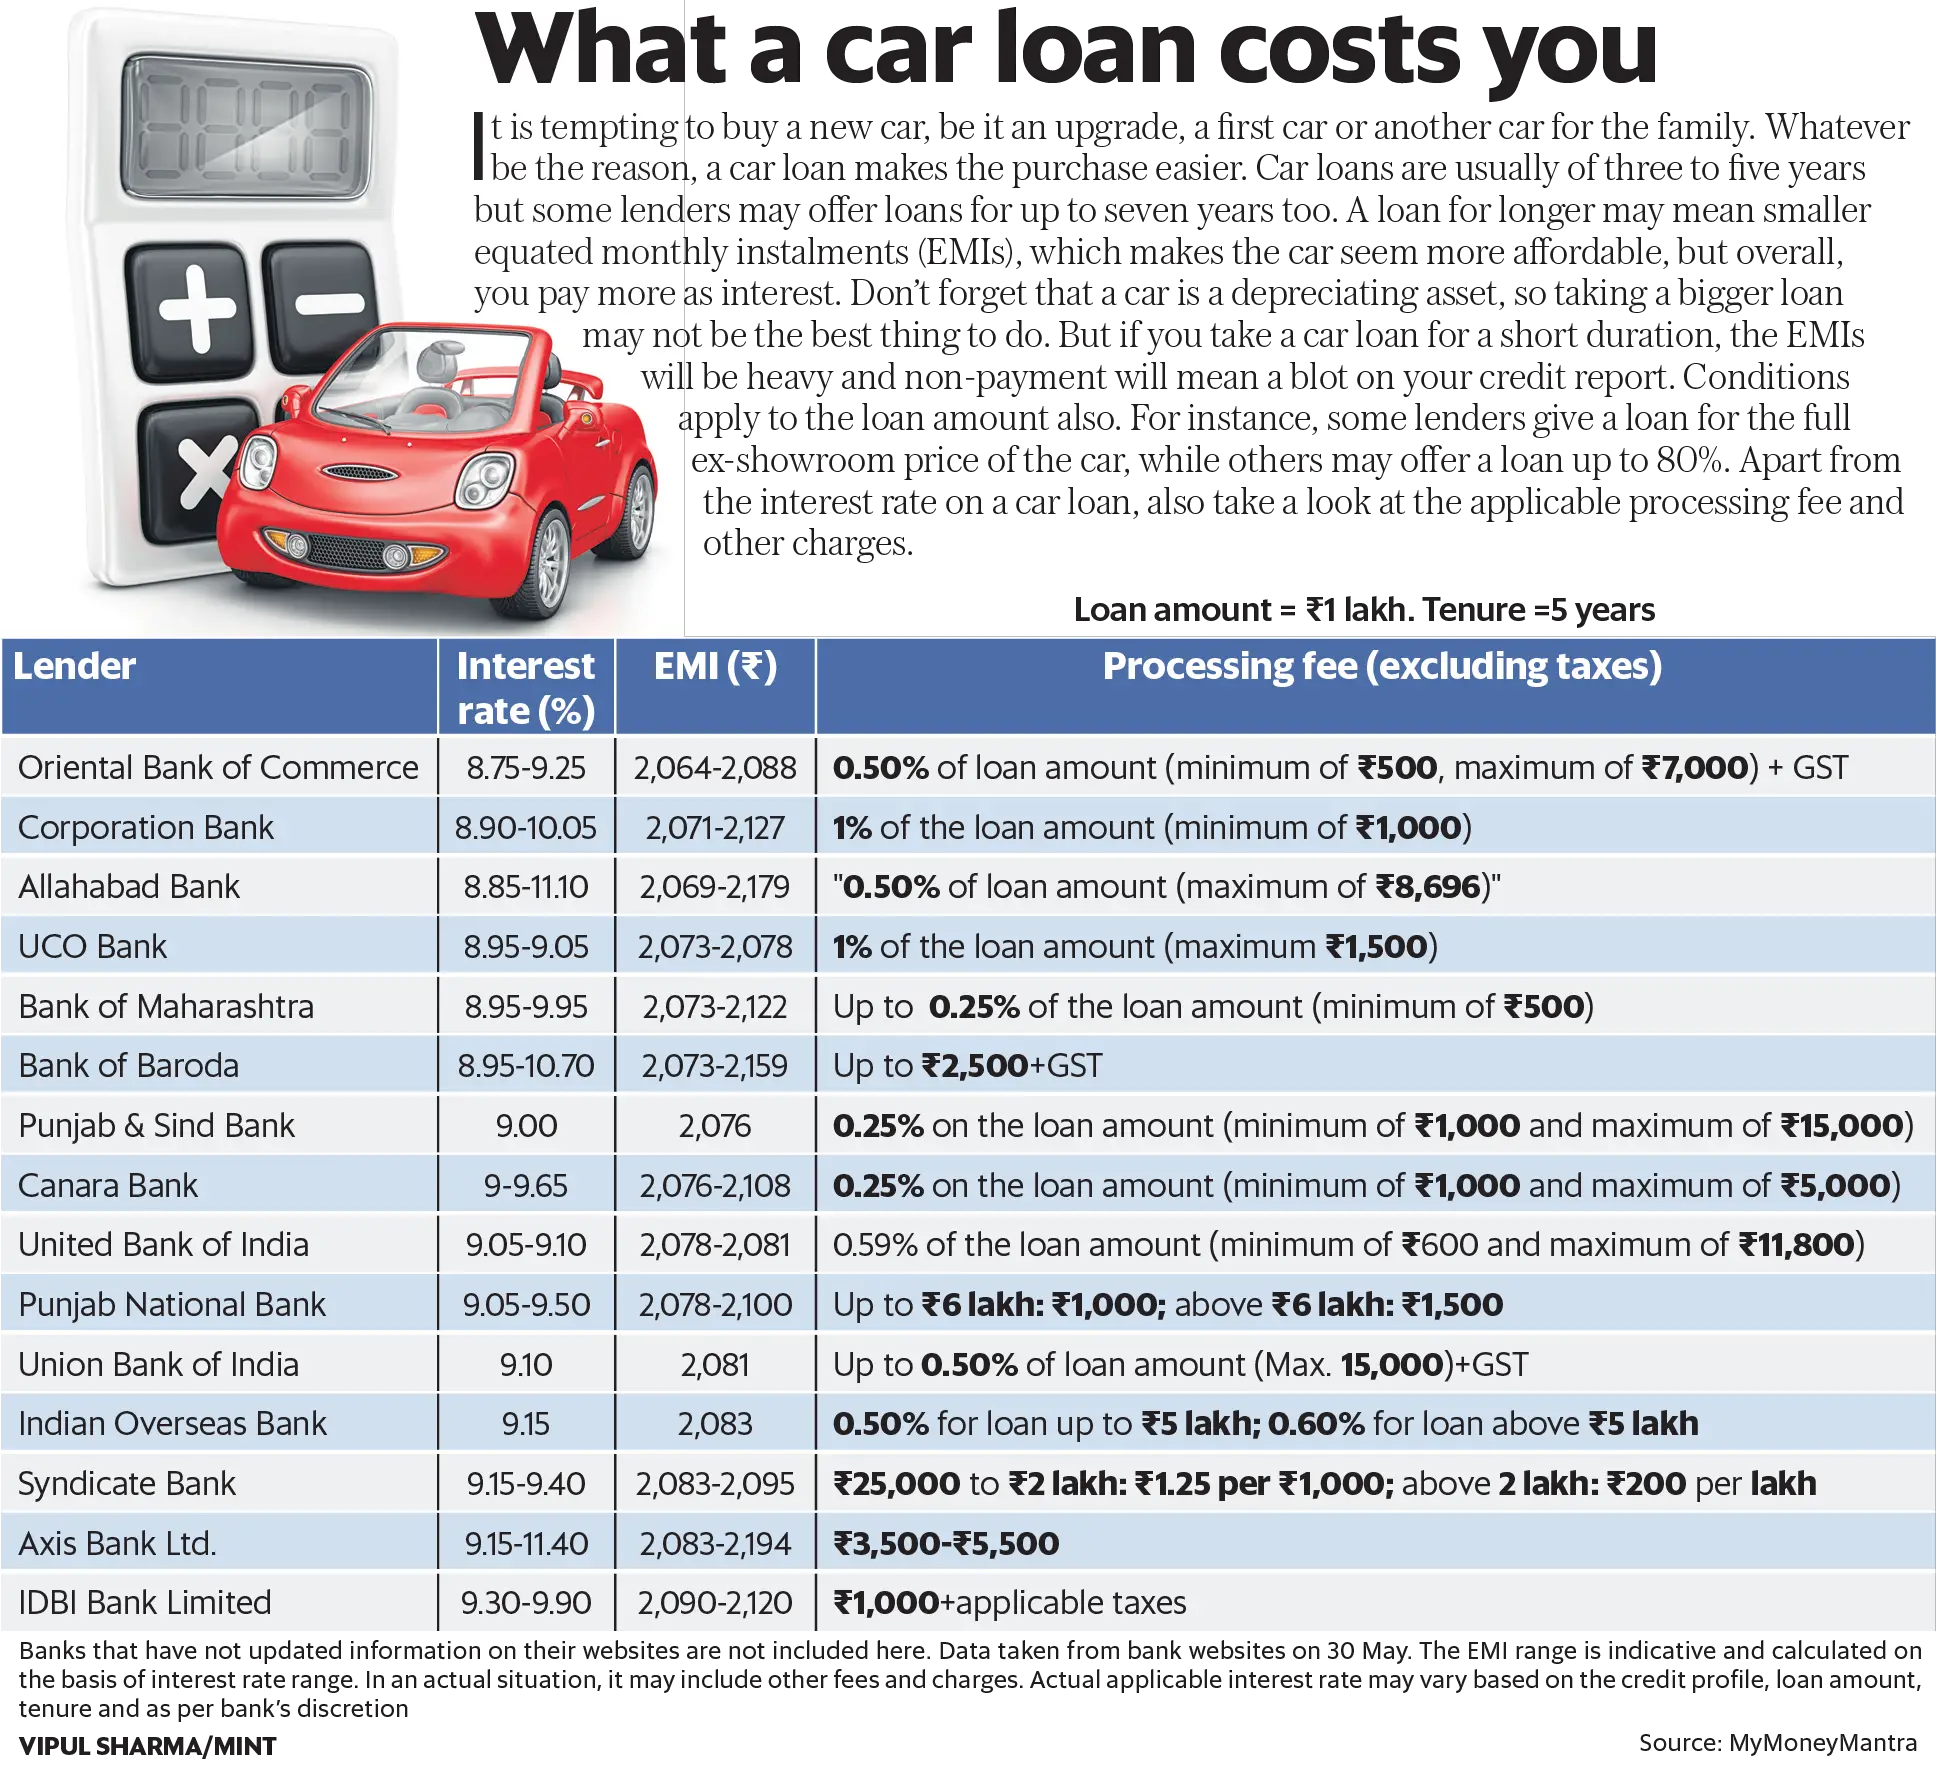 Car loan comparison: Interest rate, EMI, processing fee